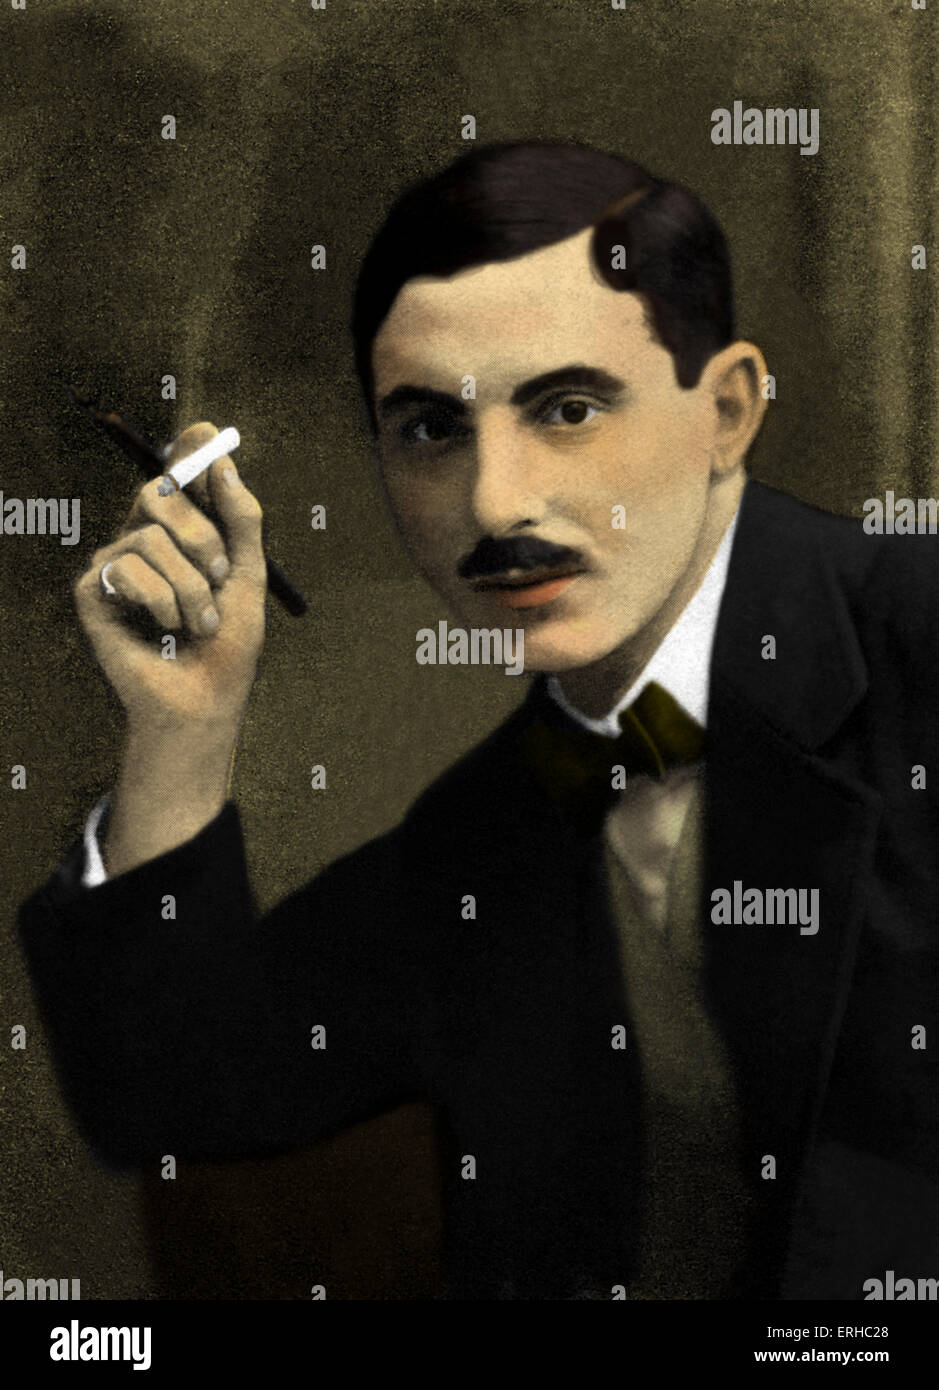 Gilbert Frankau - British novelist and World War I poet. 21 April 1884 - 4 November 1952. Stock Photo